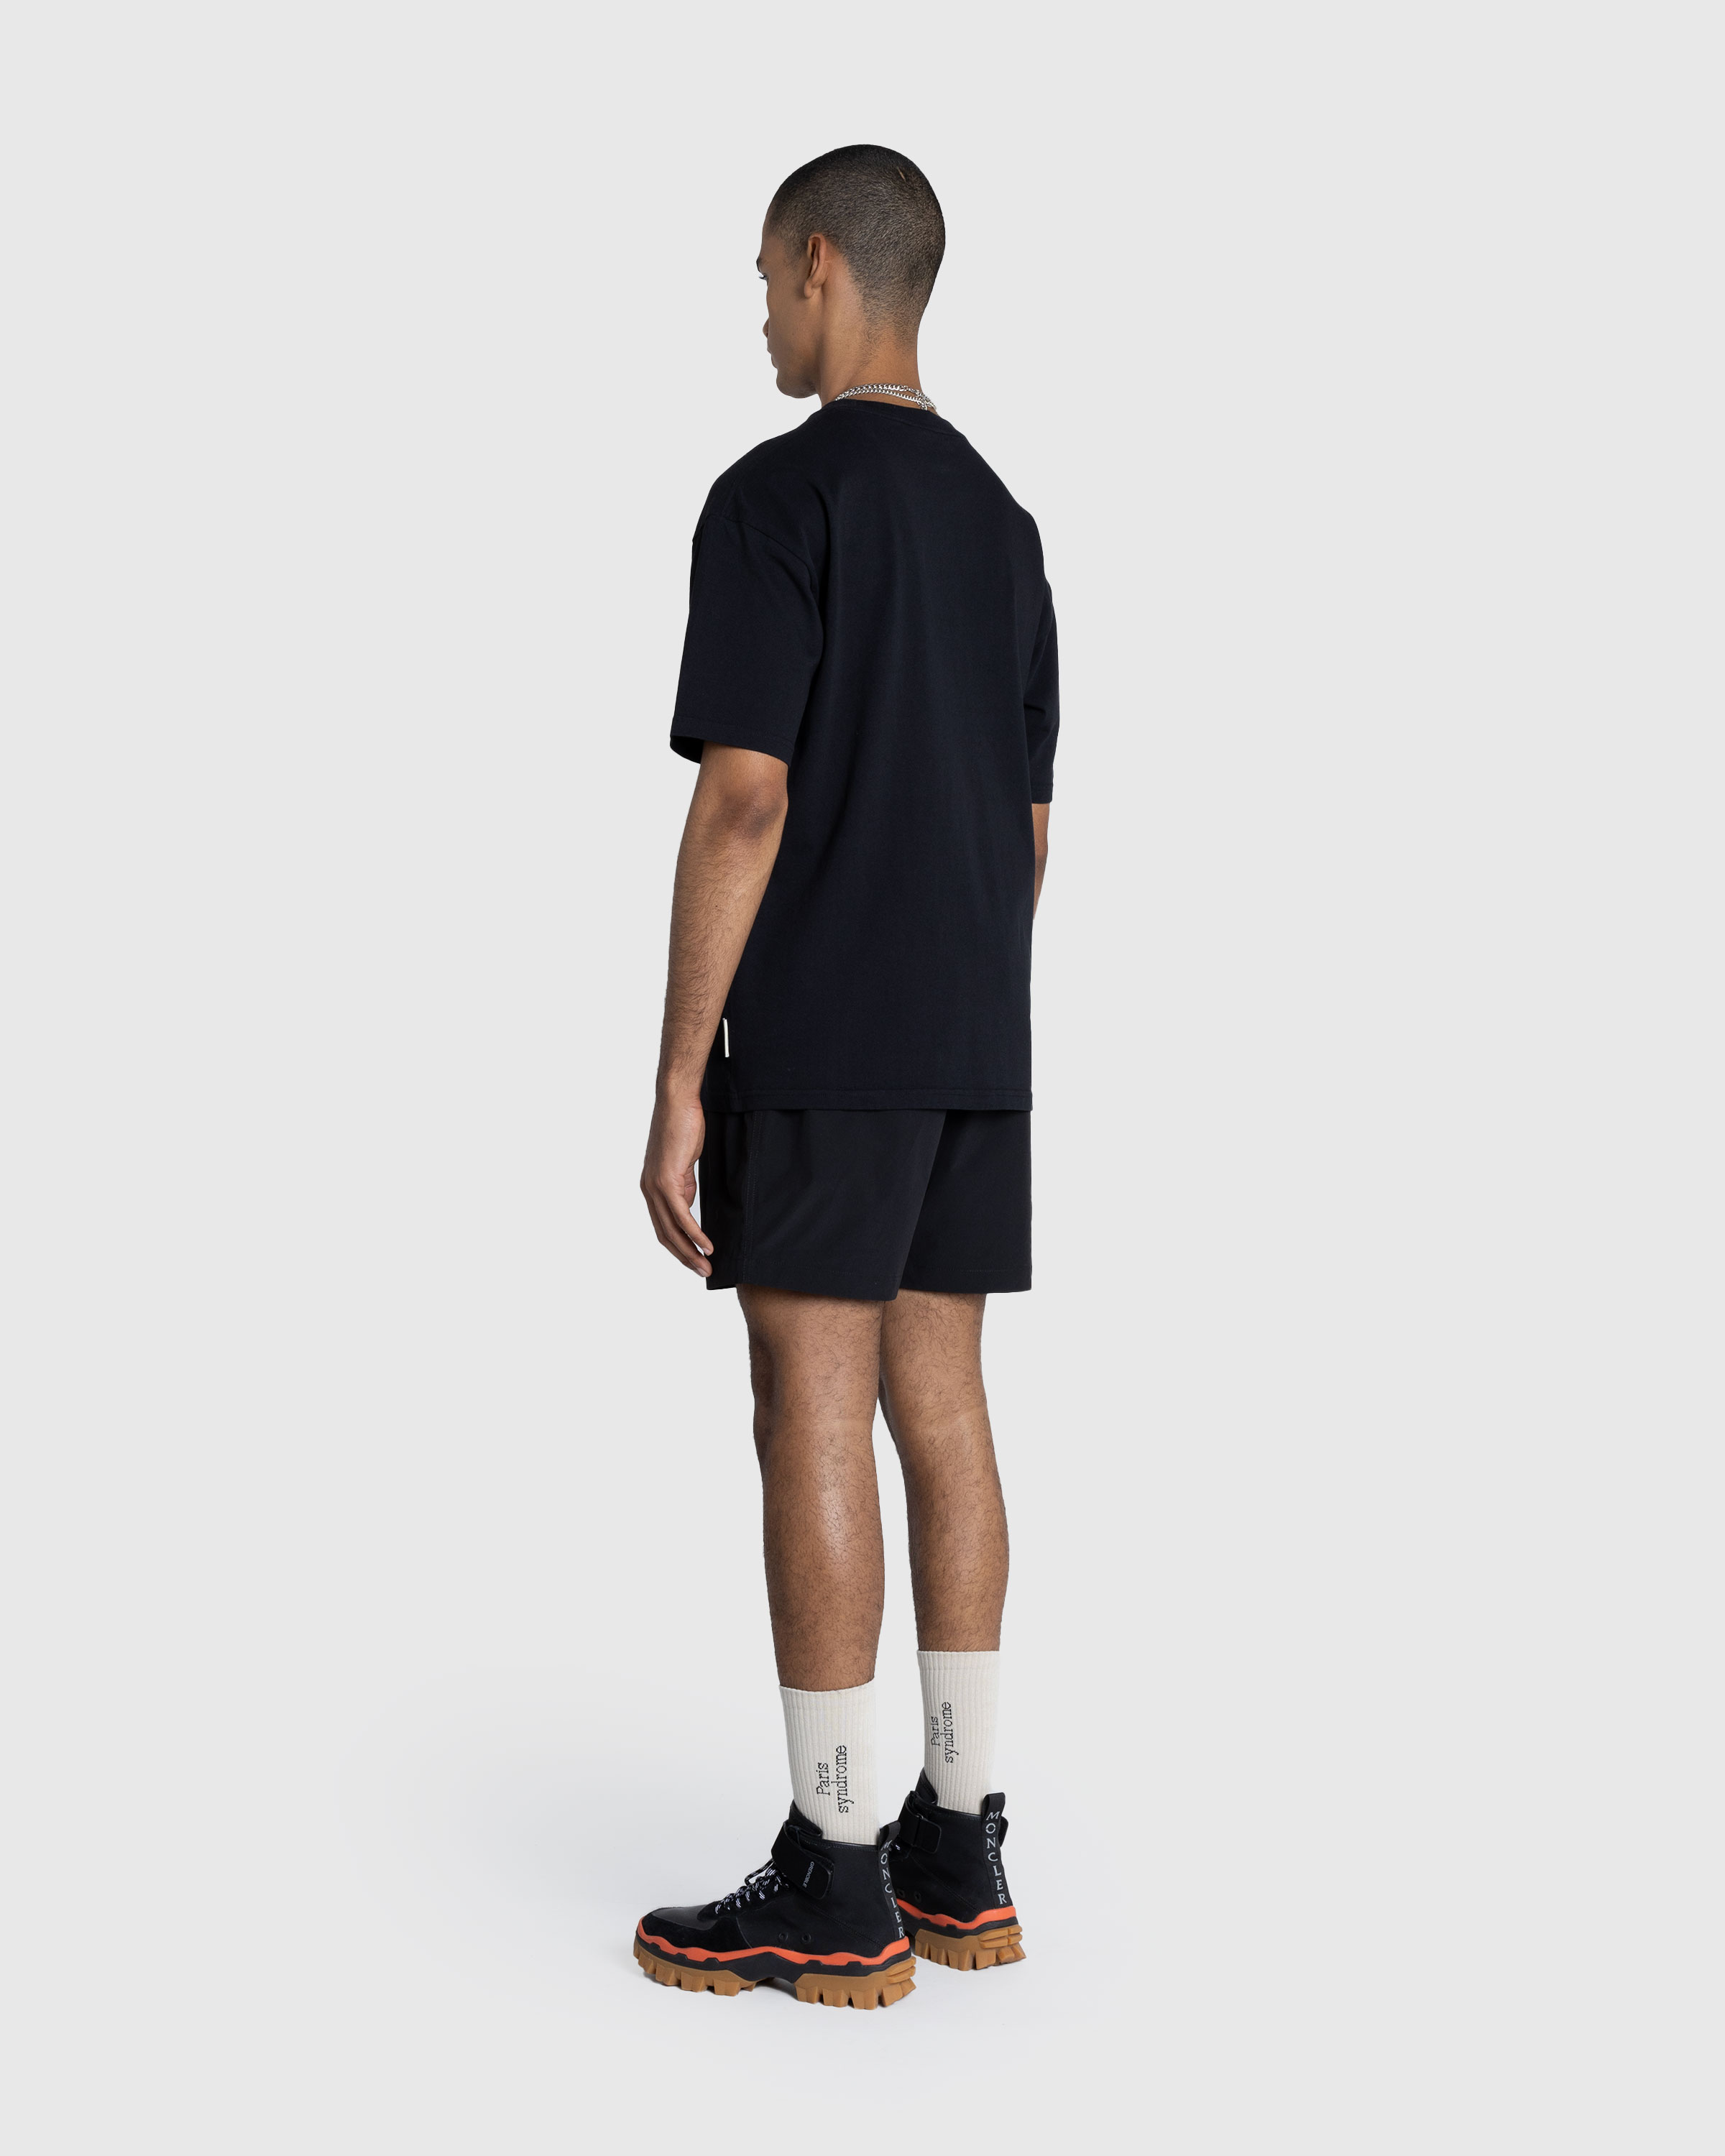 Highsnobiety – Not In Paris Nylon Shorts Black  - Bermuda Cuts - Black - Image 5